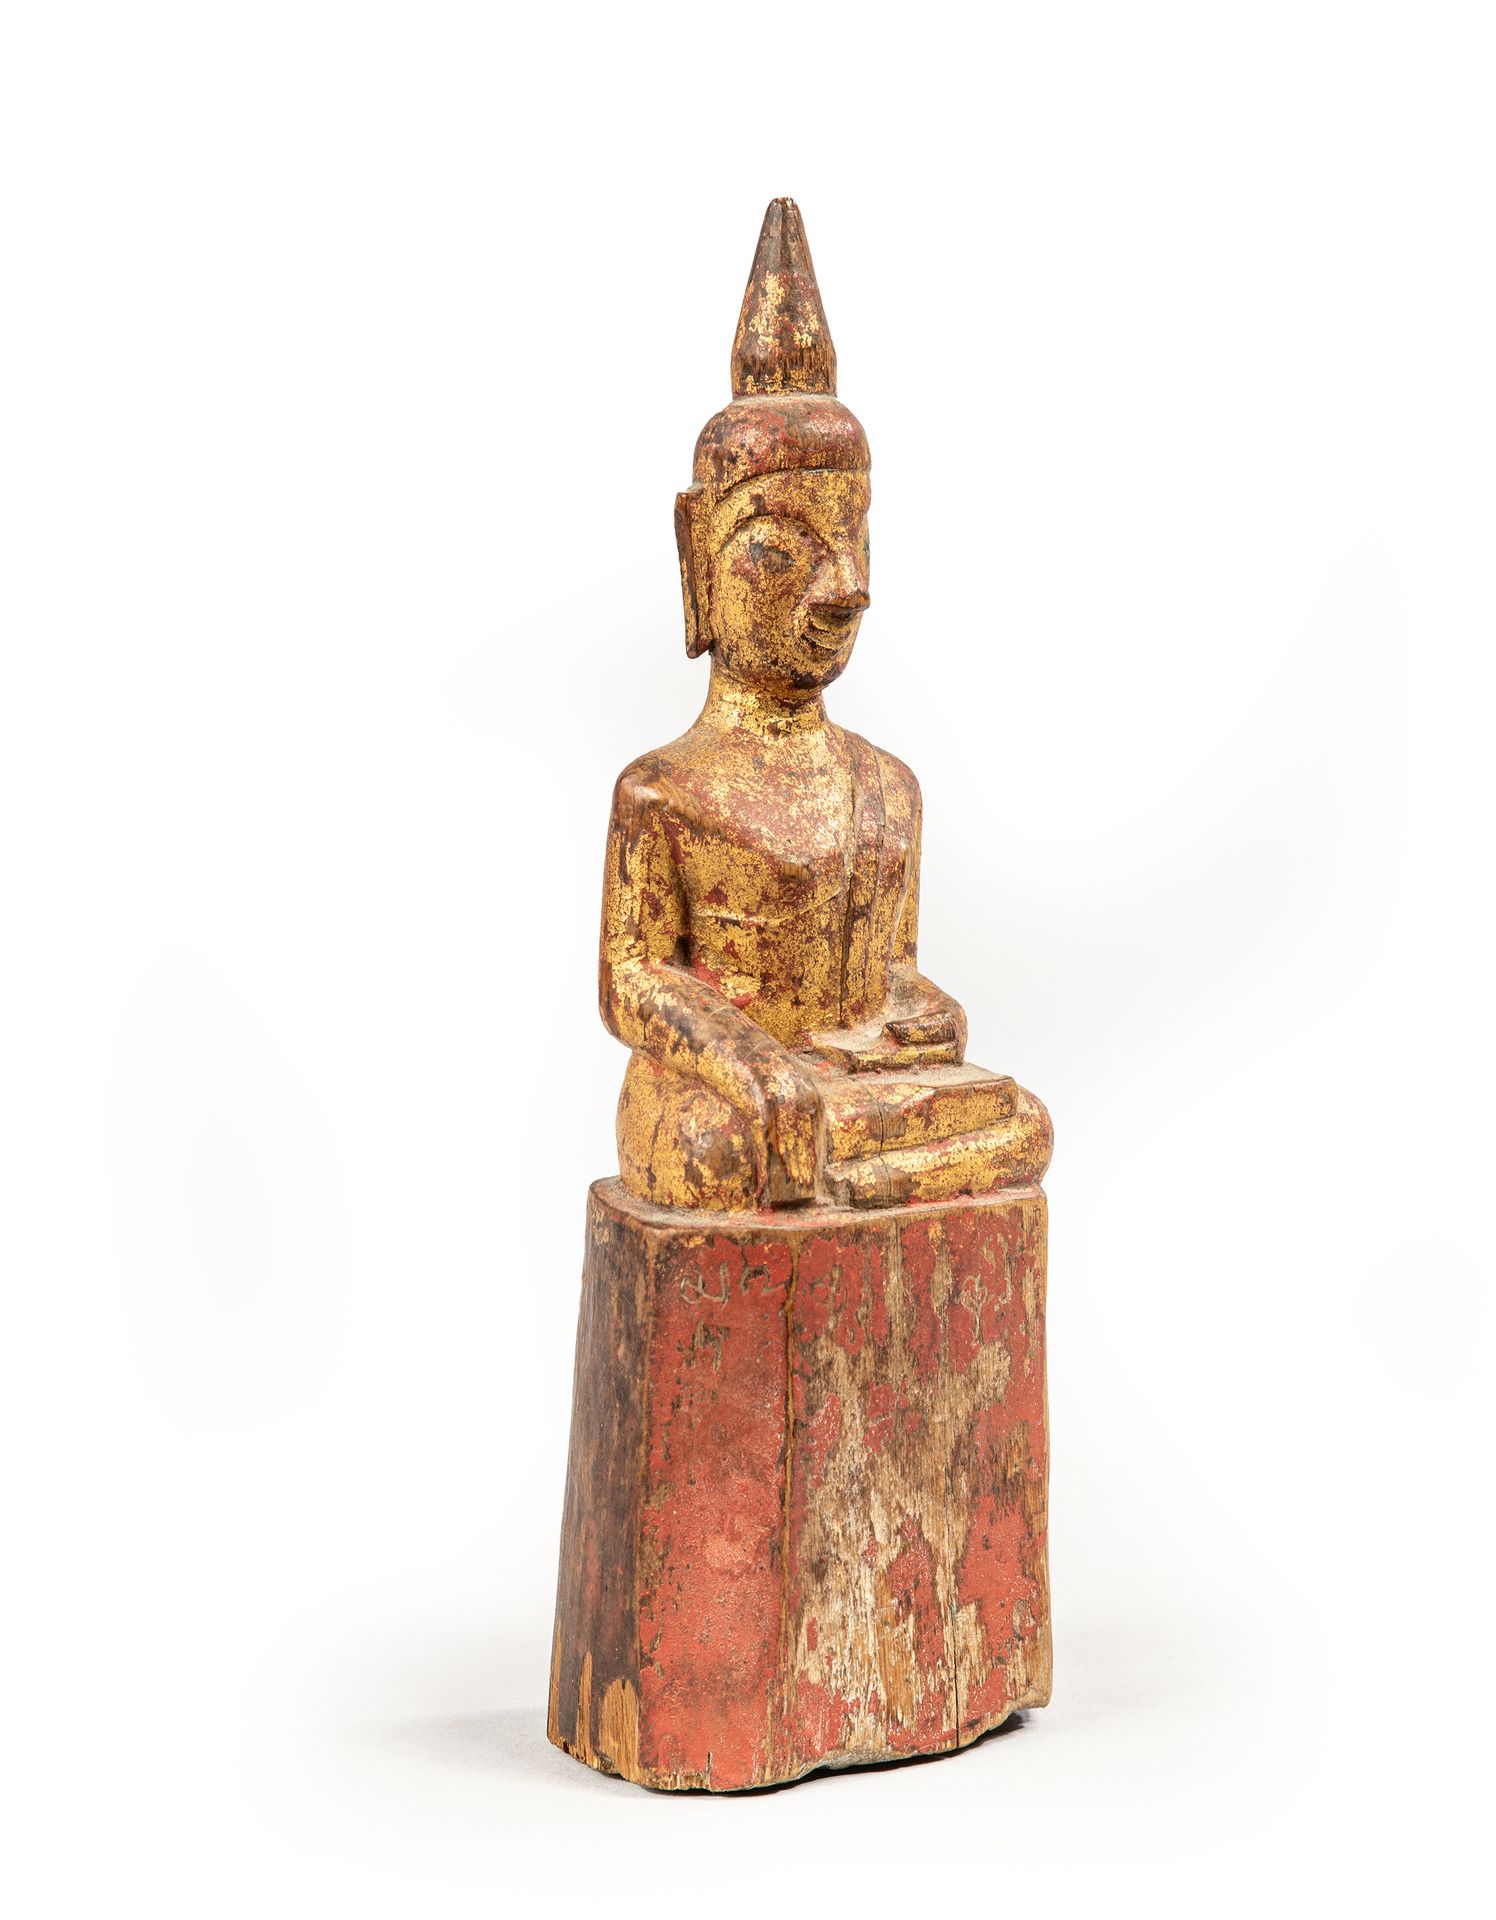 Null 
Buda de madera lacada.

Birmania, siglo XIX

H. 18,5 cm